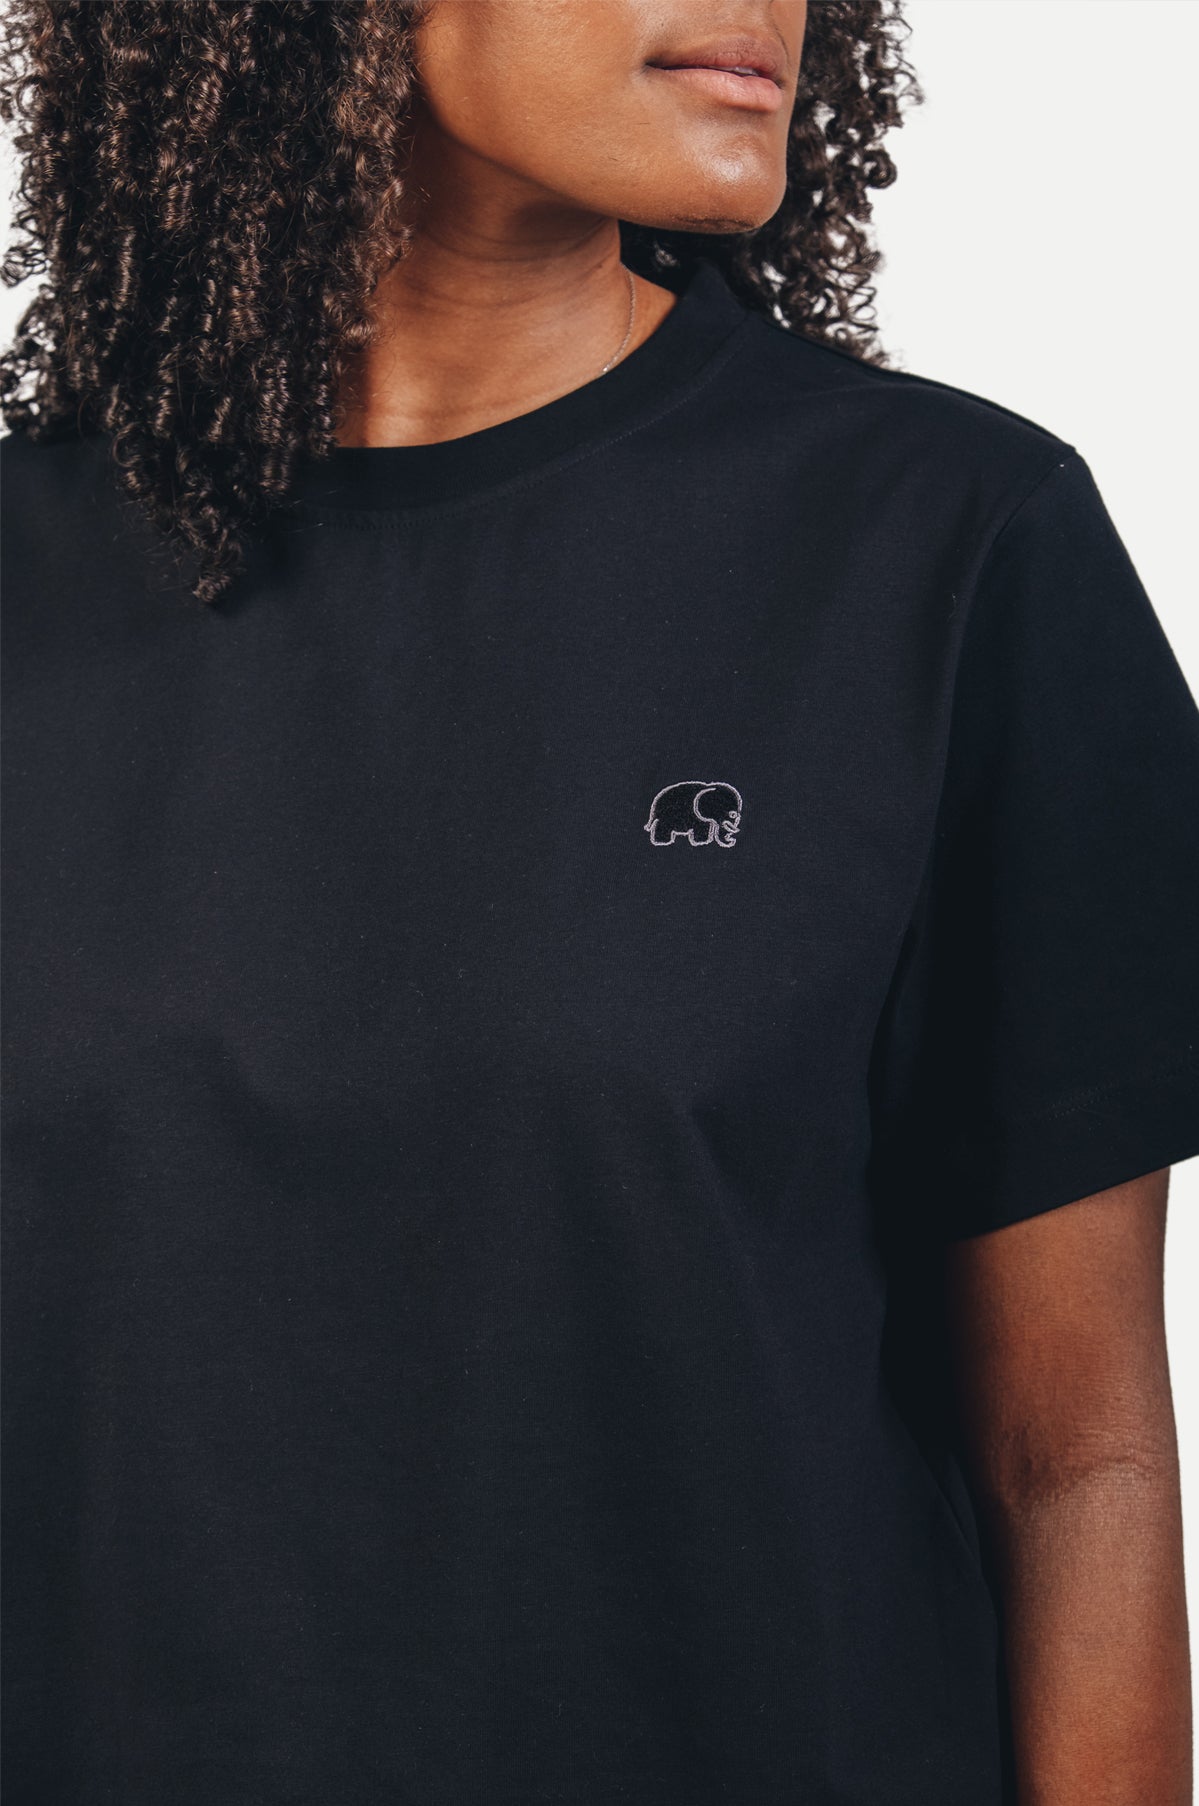 Women's Organic Essential T-Shirt Black